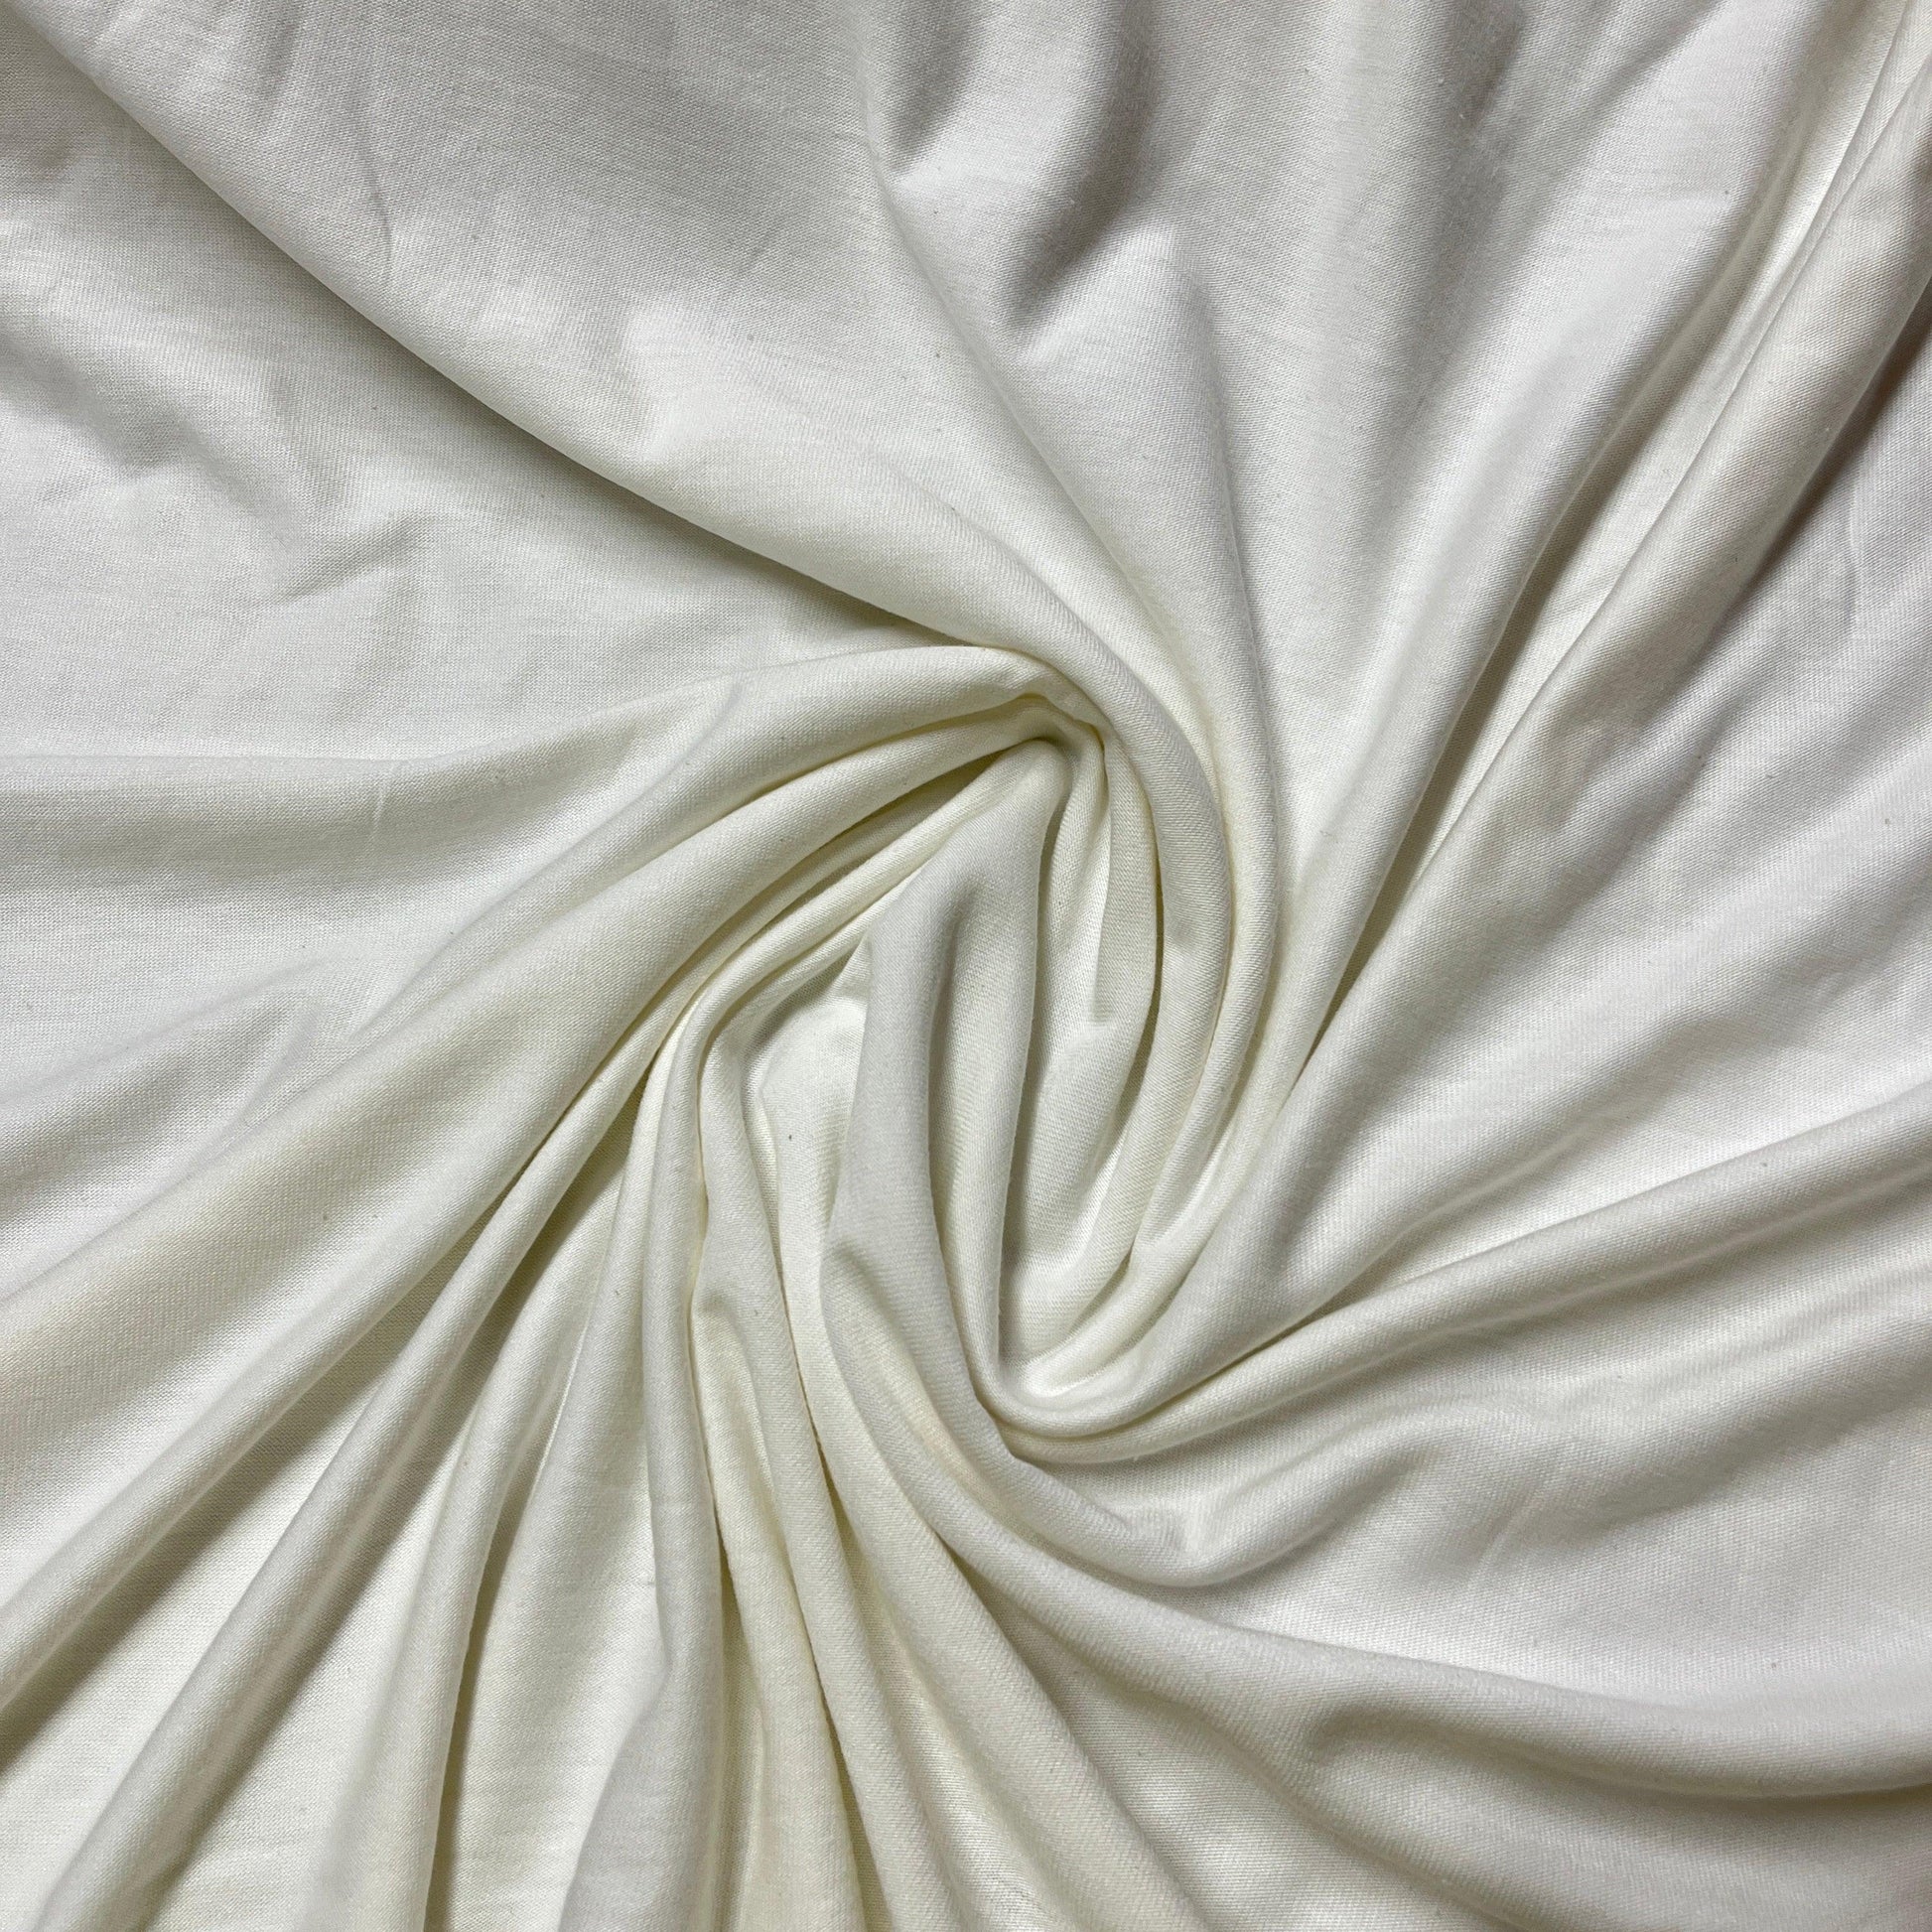 Off-White Bamboo Jersey Fabric- 200 GSM, $8.91/yd - Rolls - Nature's Fabrics